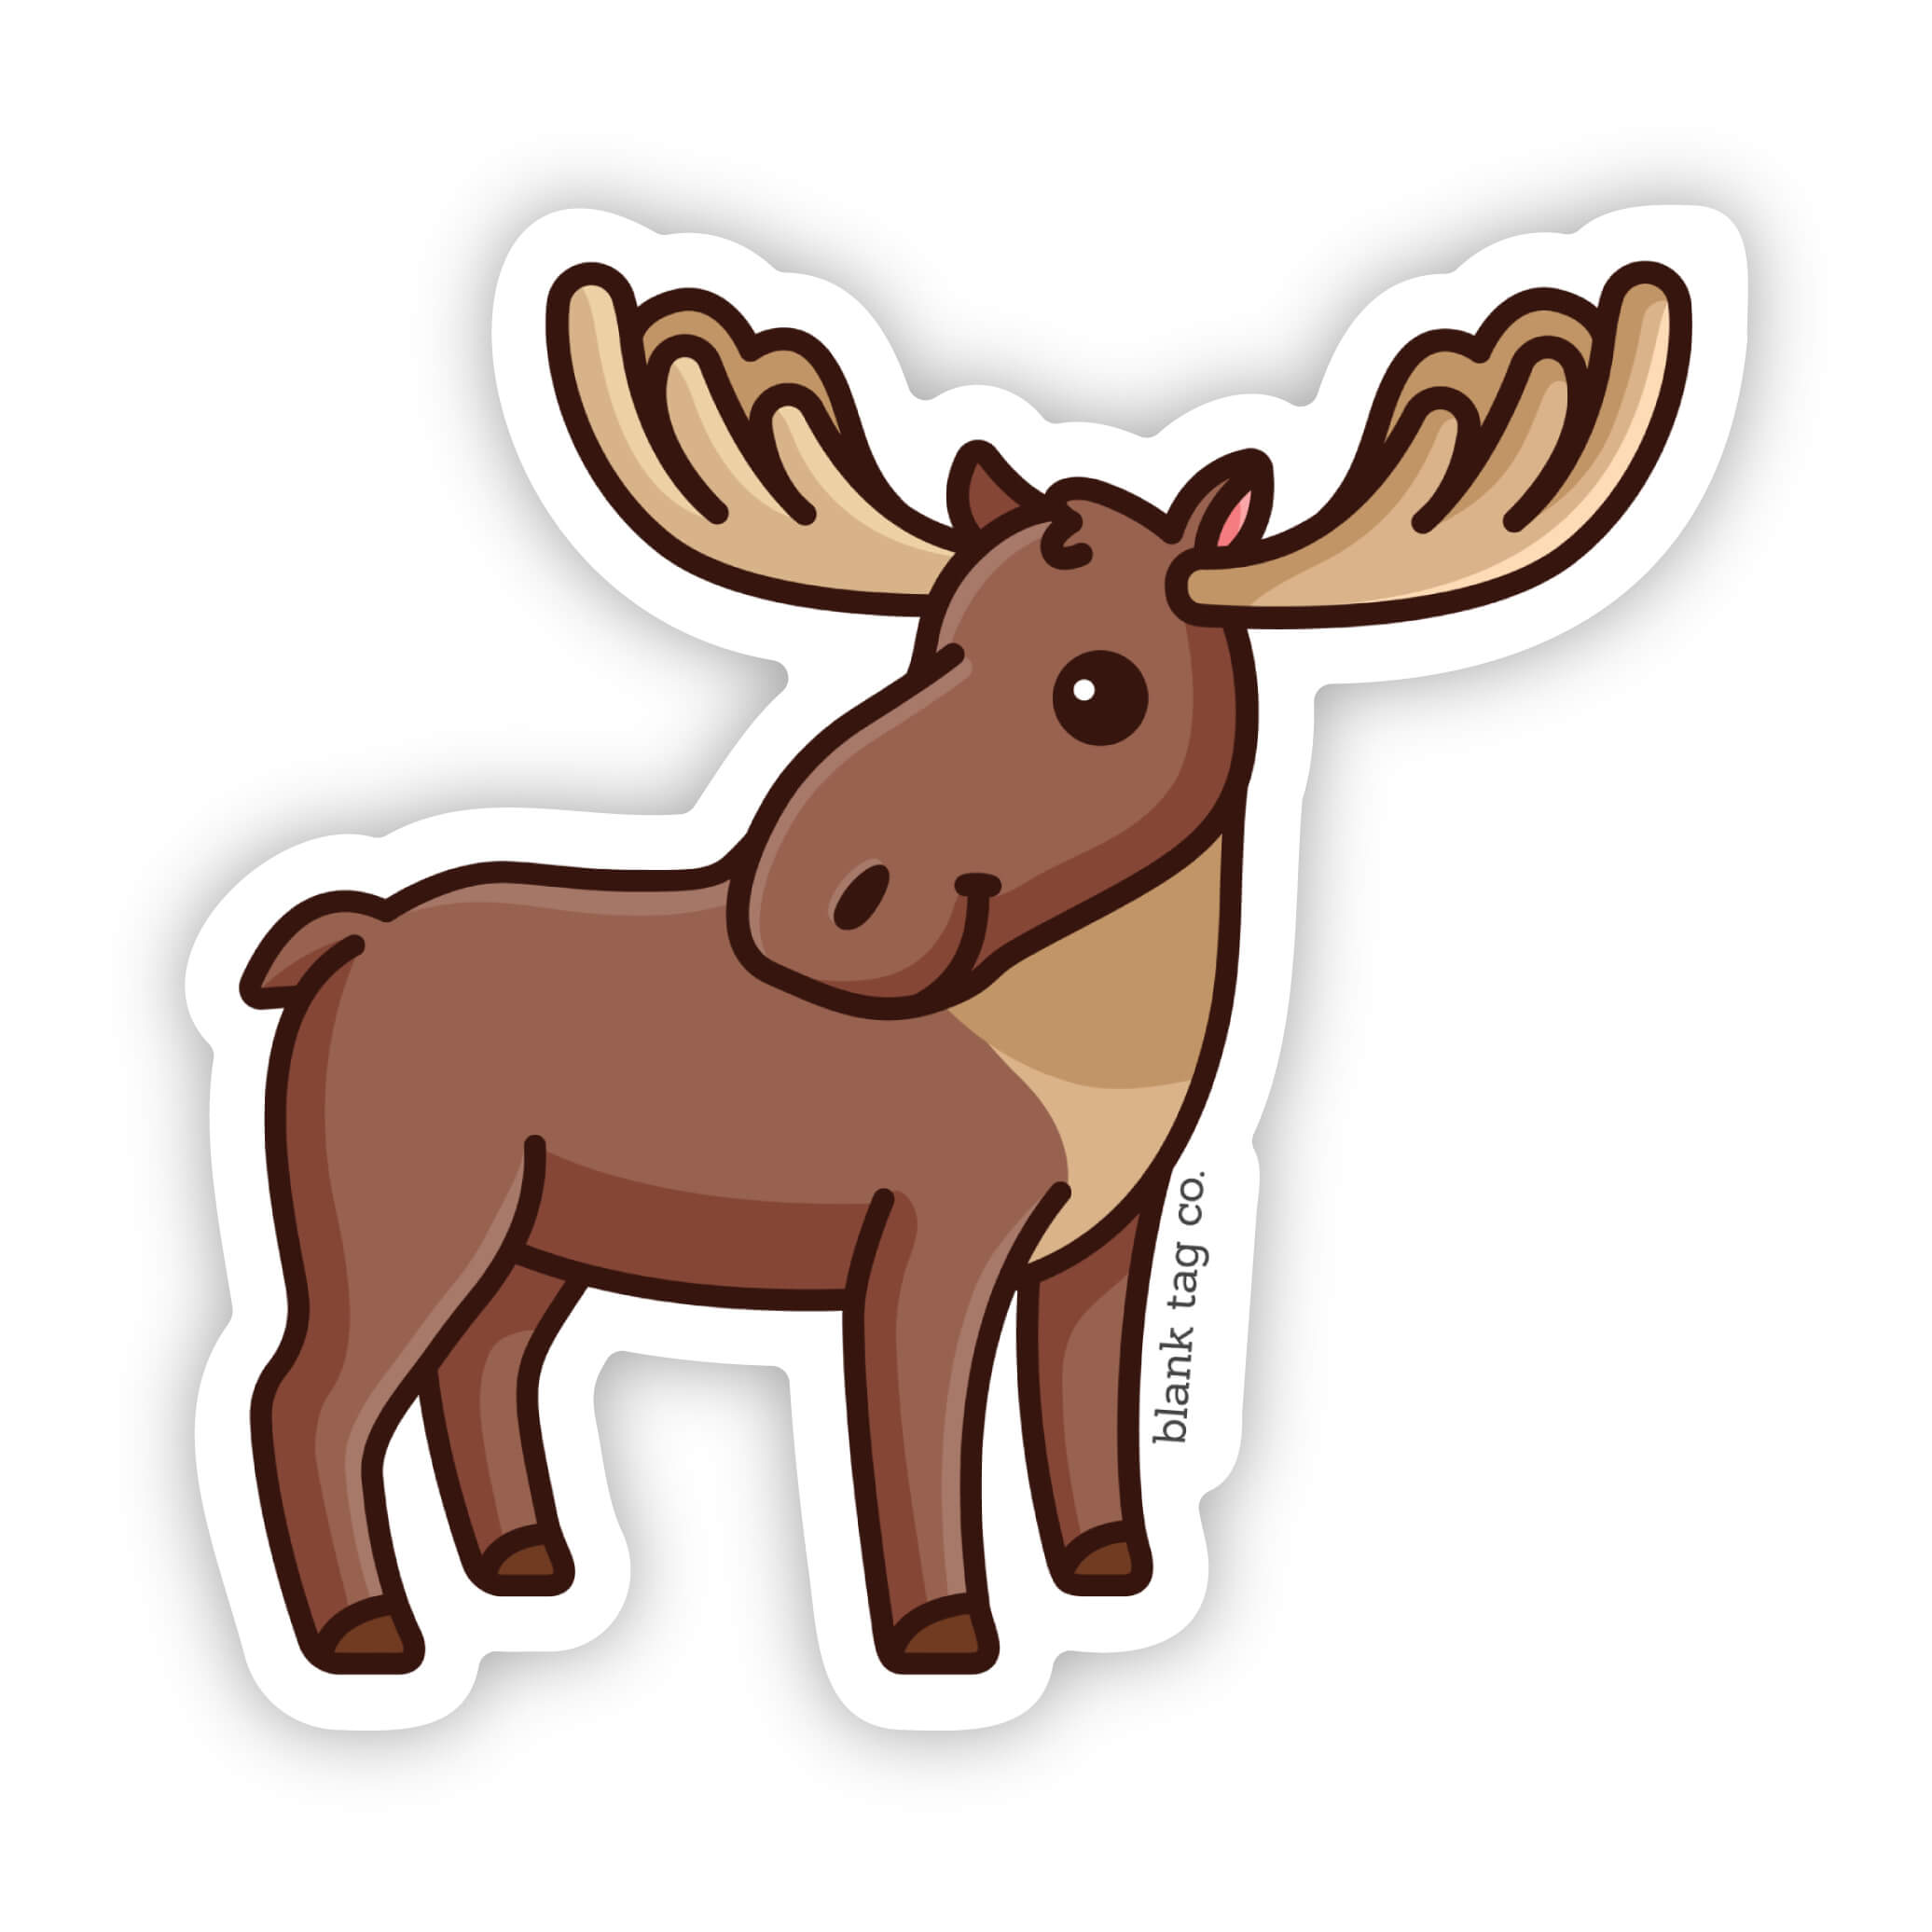 The Moose Sticker